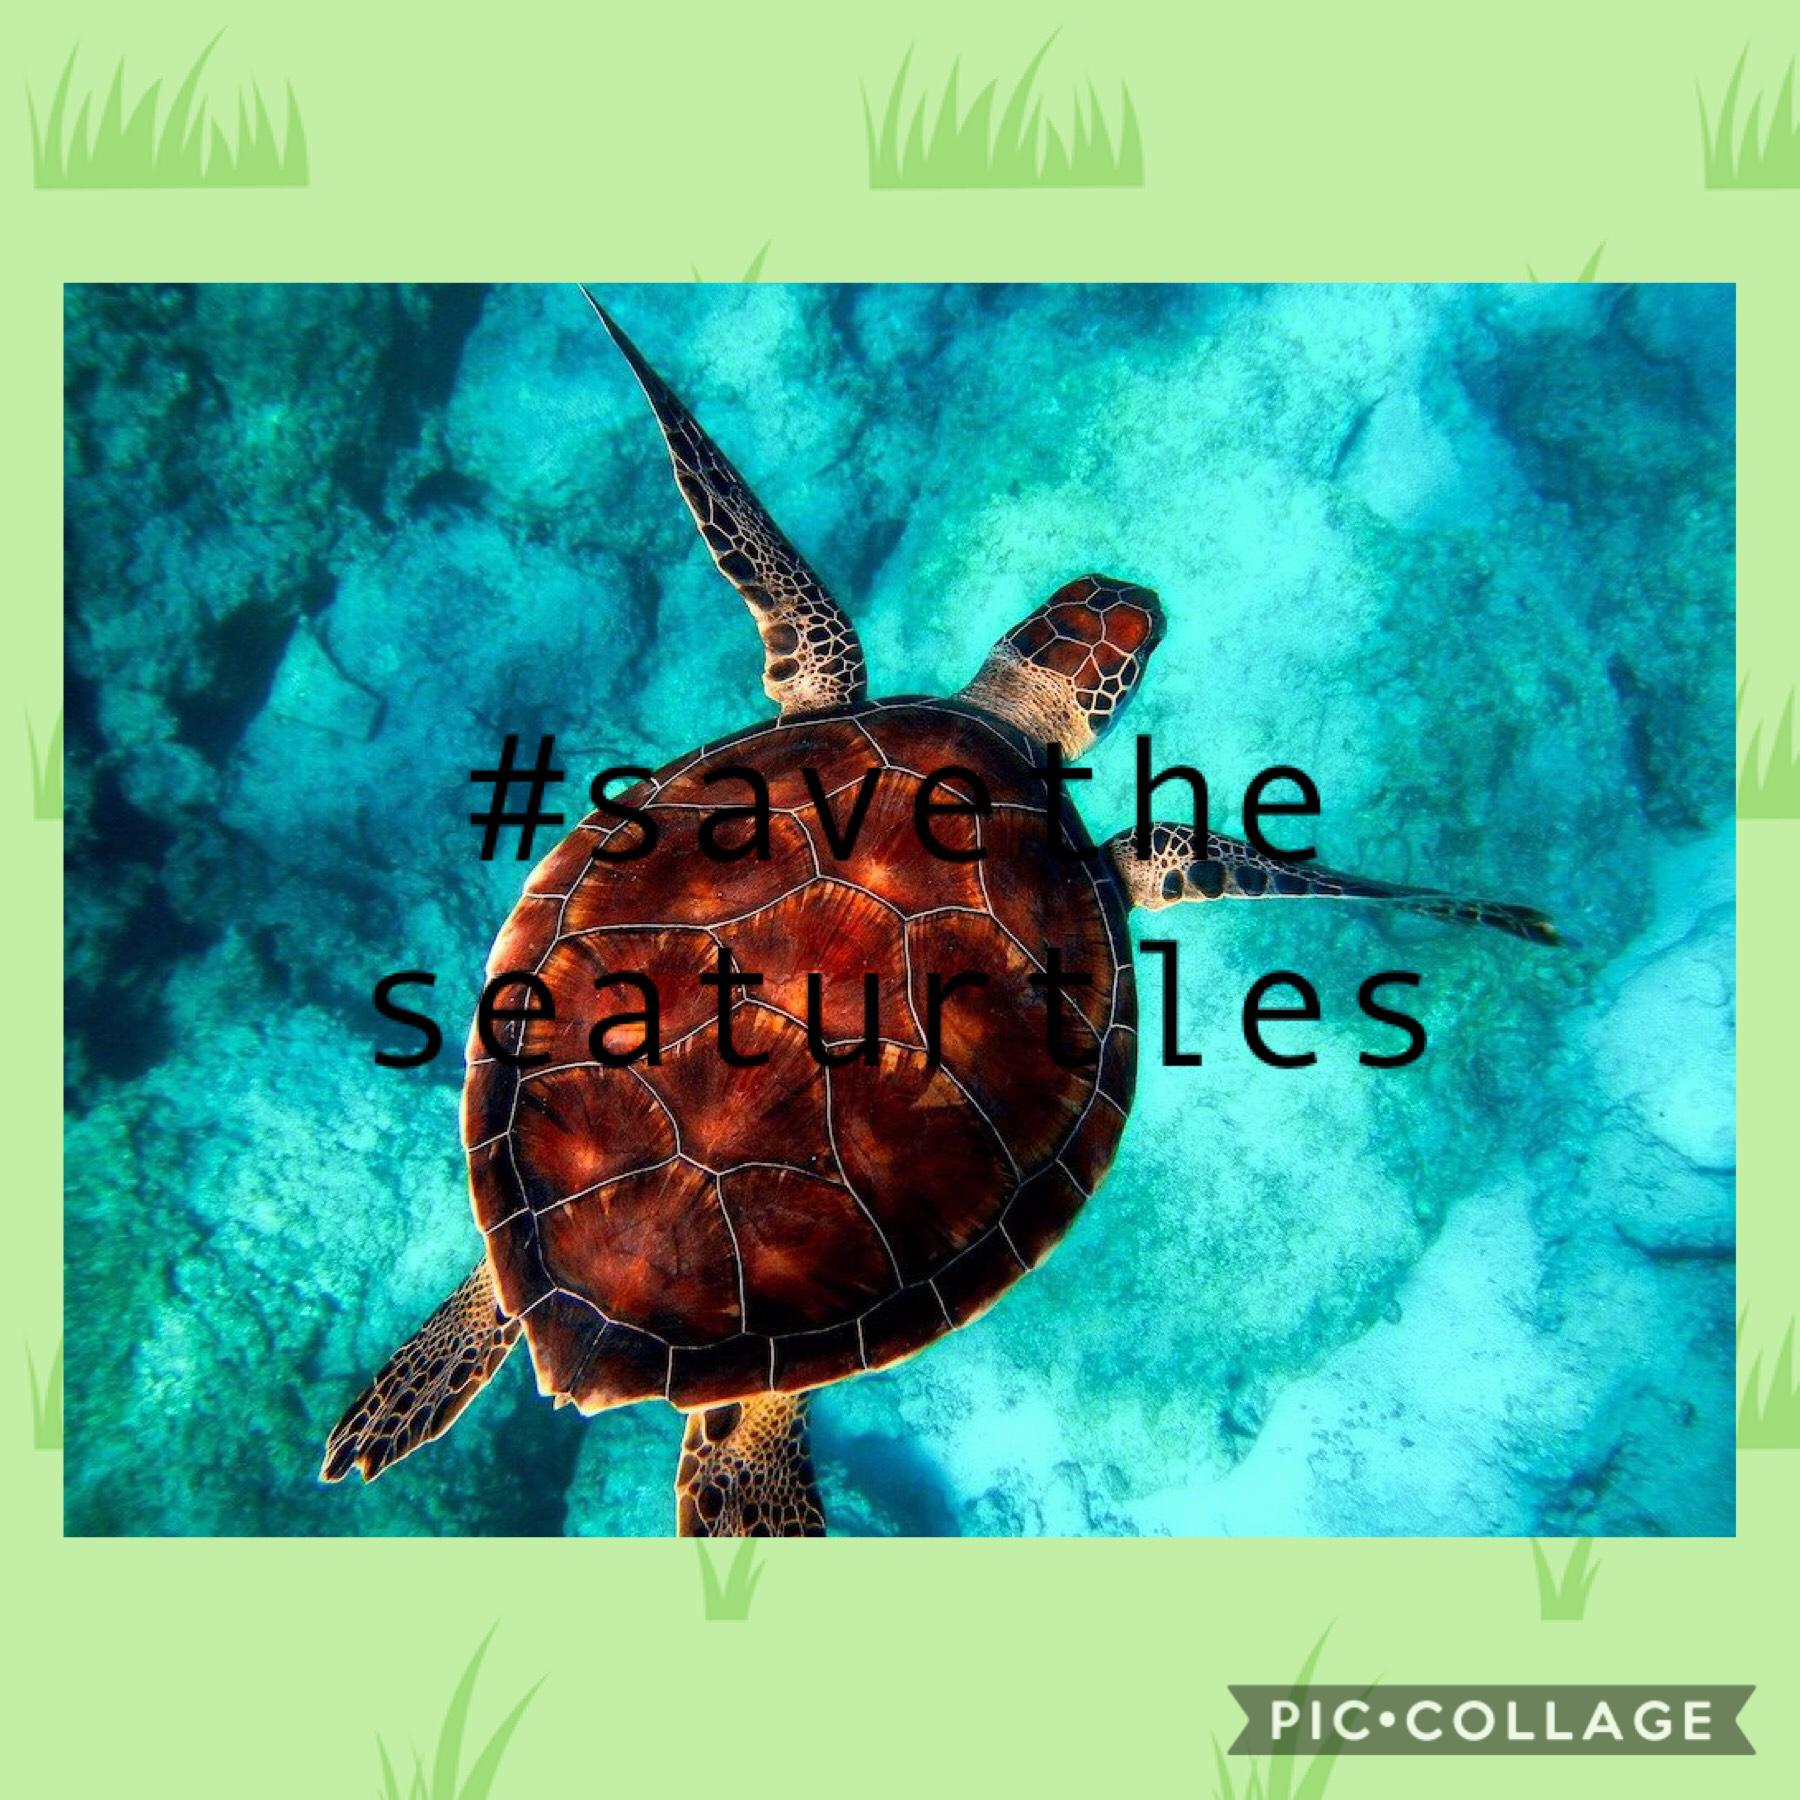 Save them sea turtles 🐢 